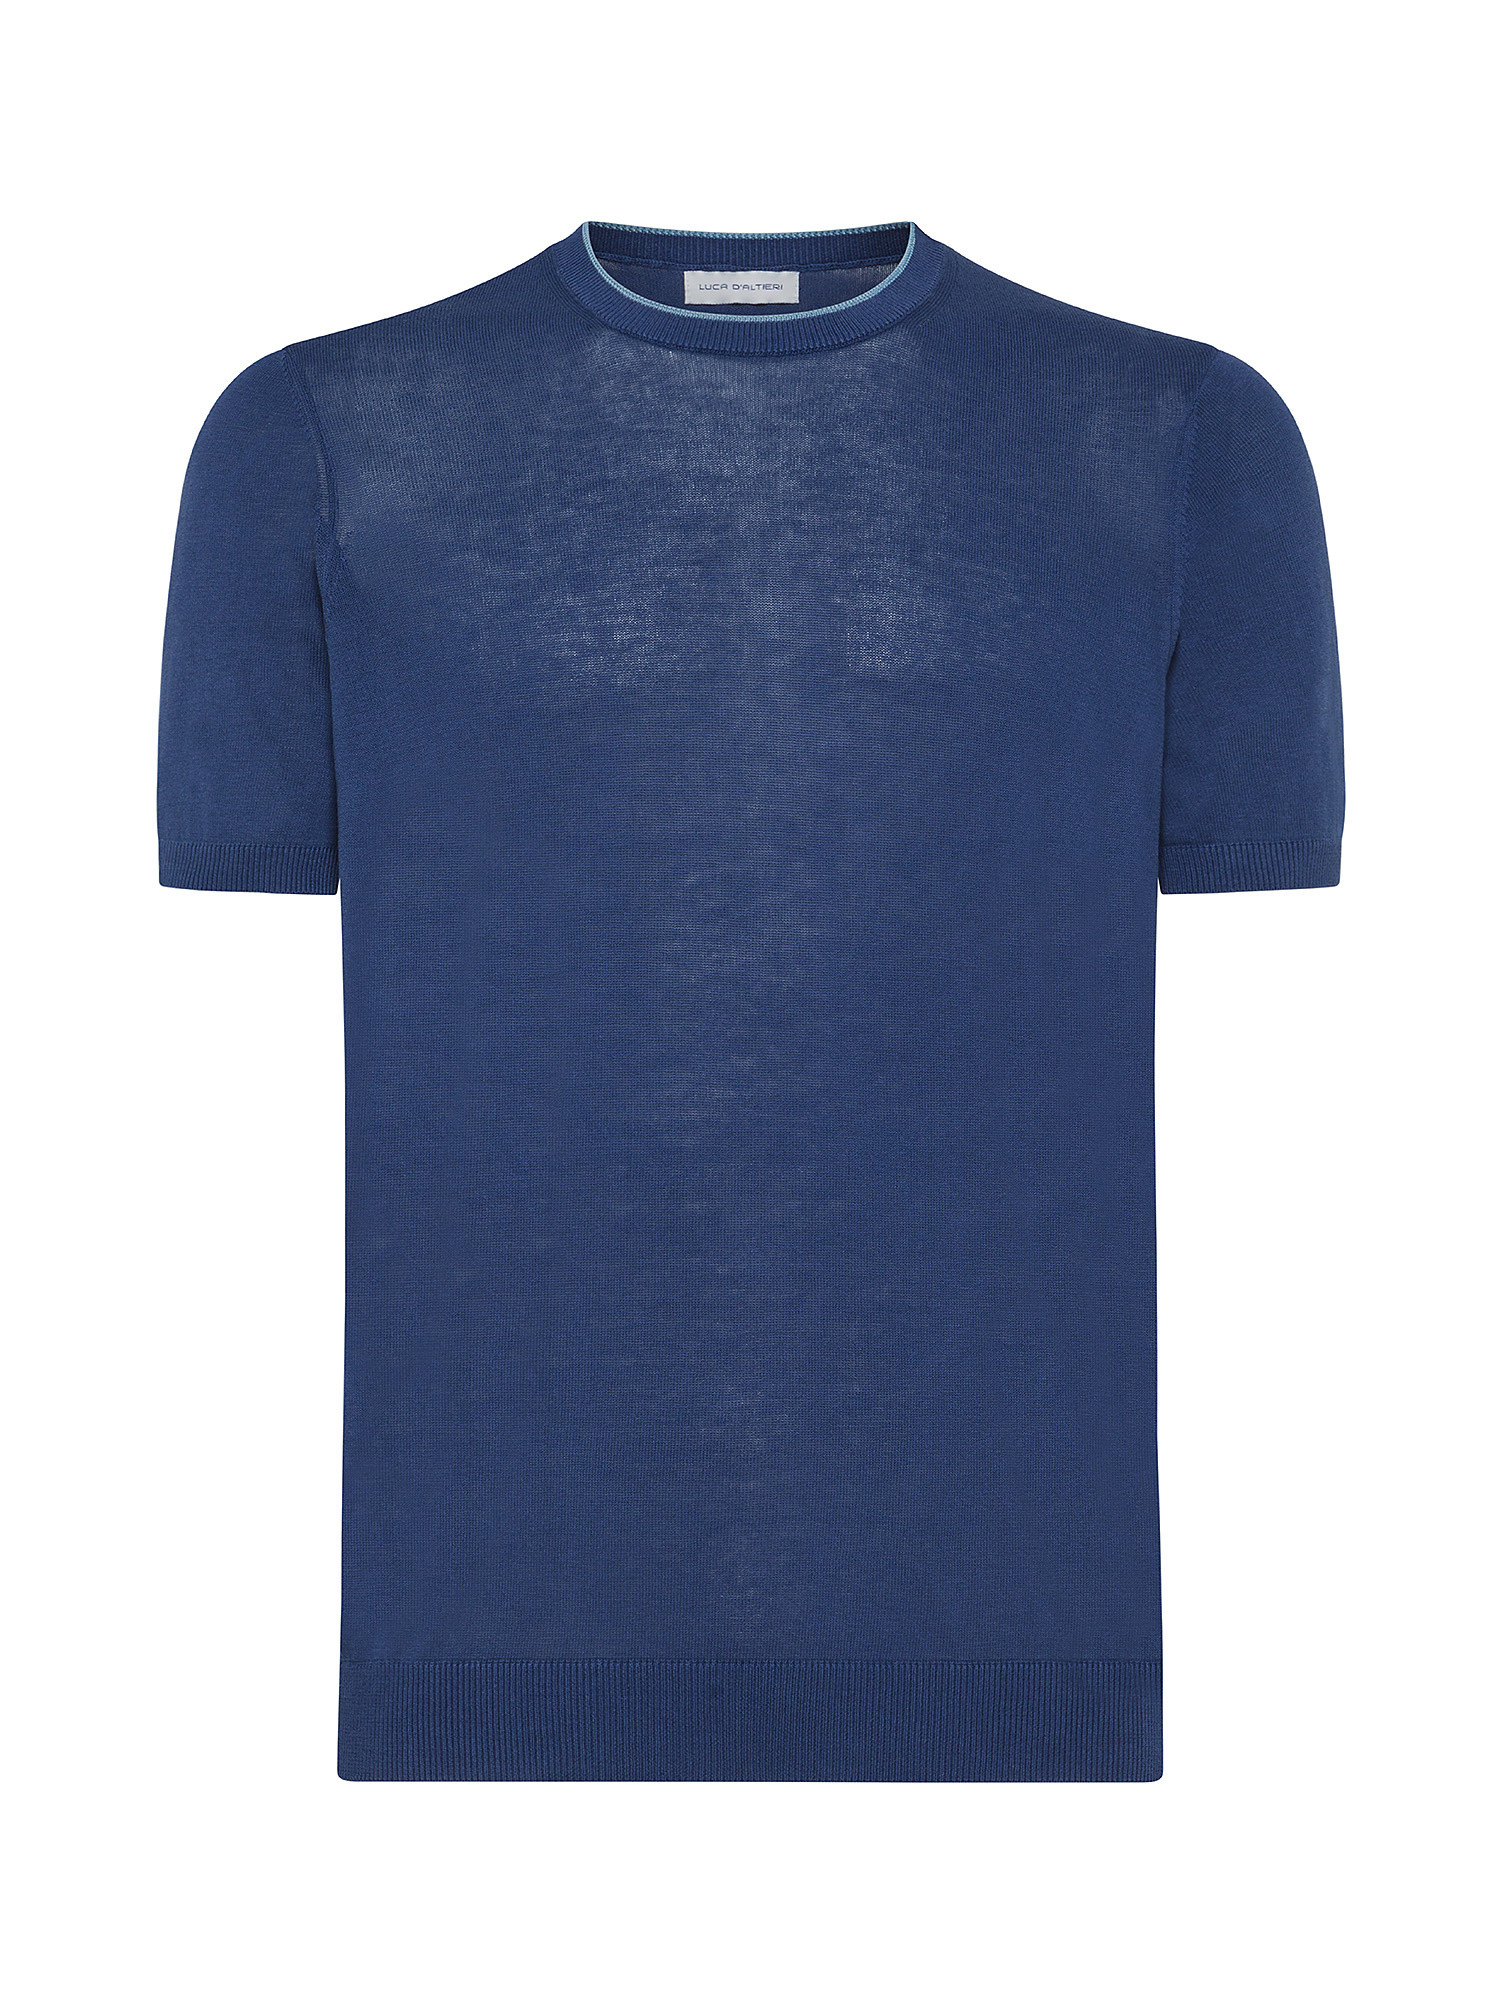 Luca D'Altieri - T-shirt in crepe di cotone, Azzurro, large image number 0